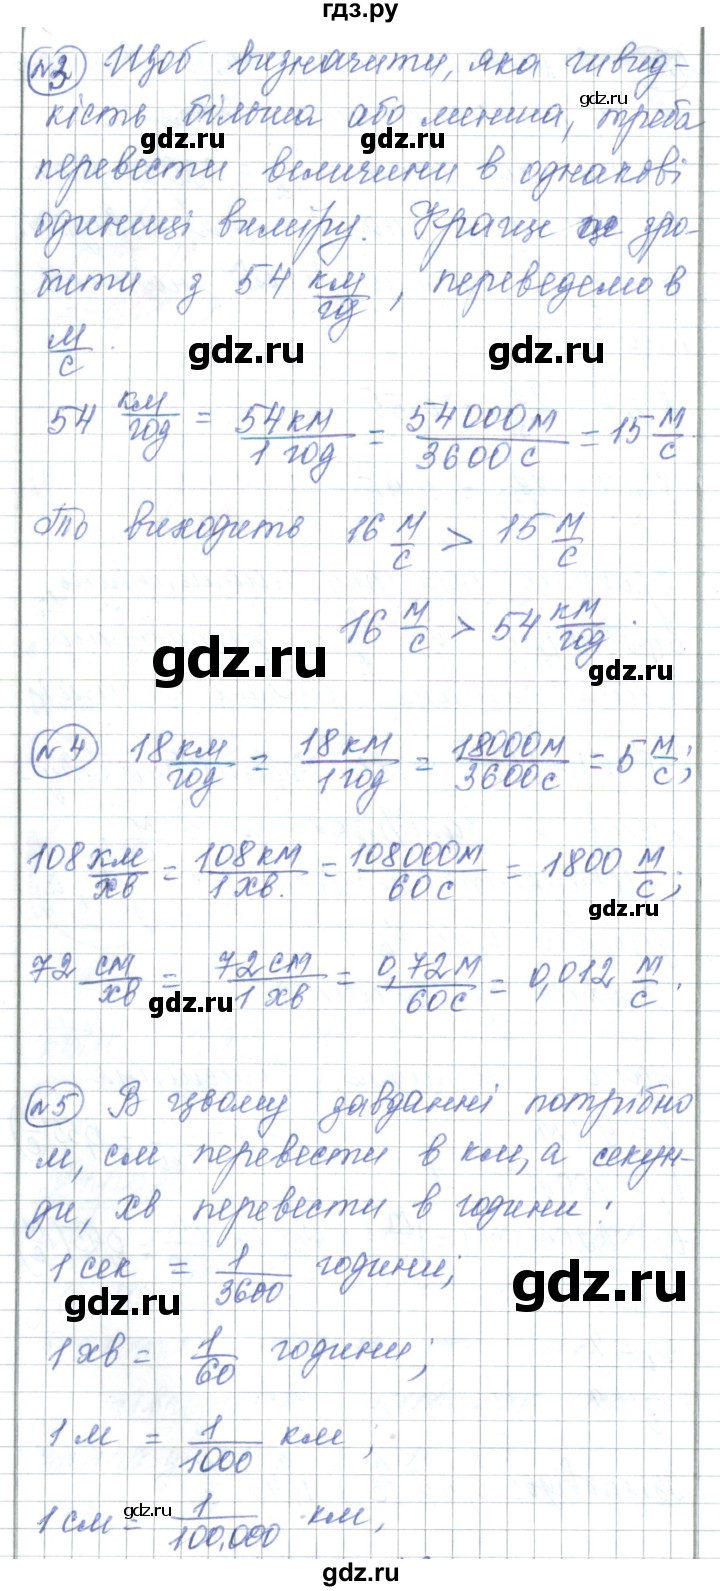 ГДЗ по физике 7 класс Барьяхтар   страница - 63, Решебник